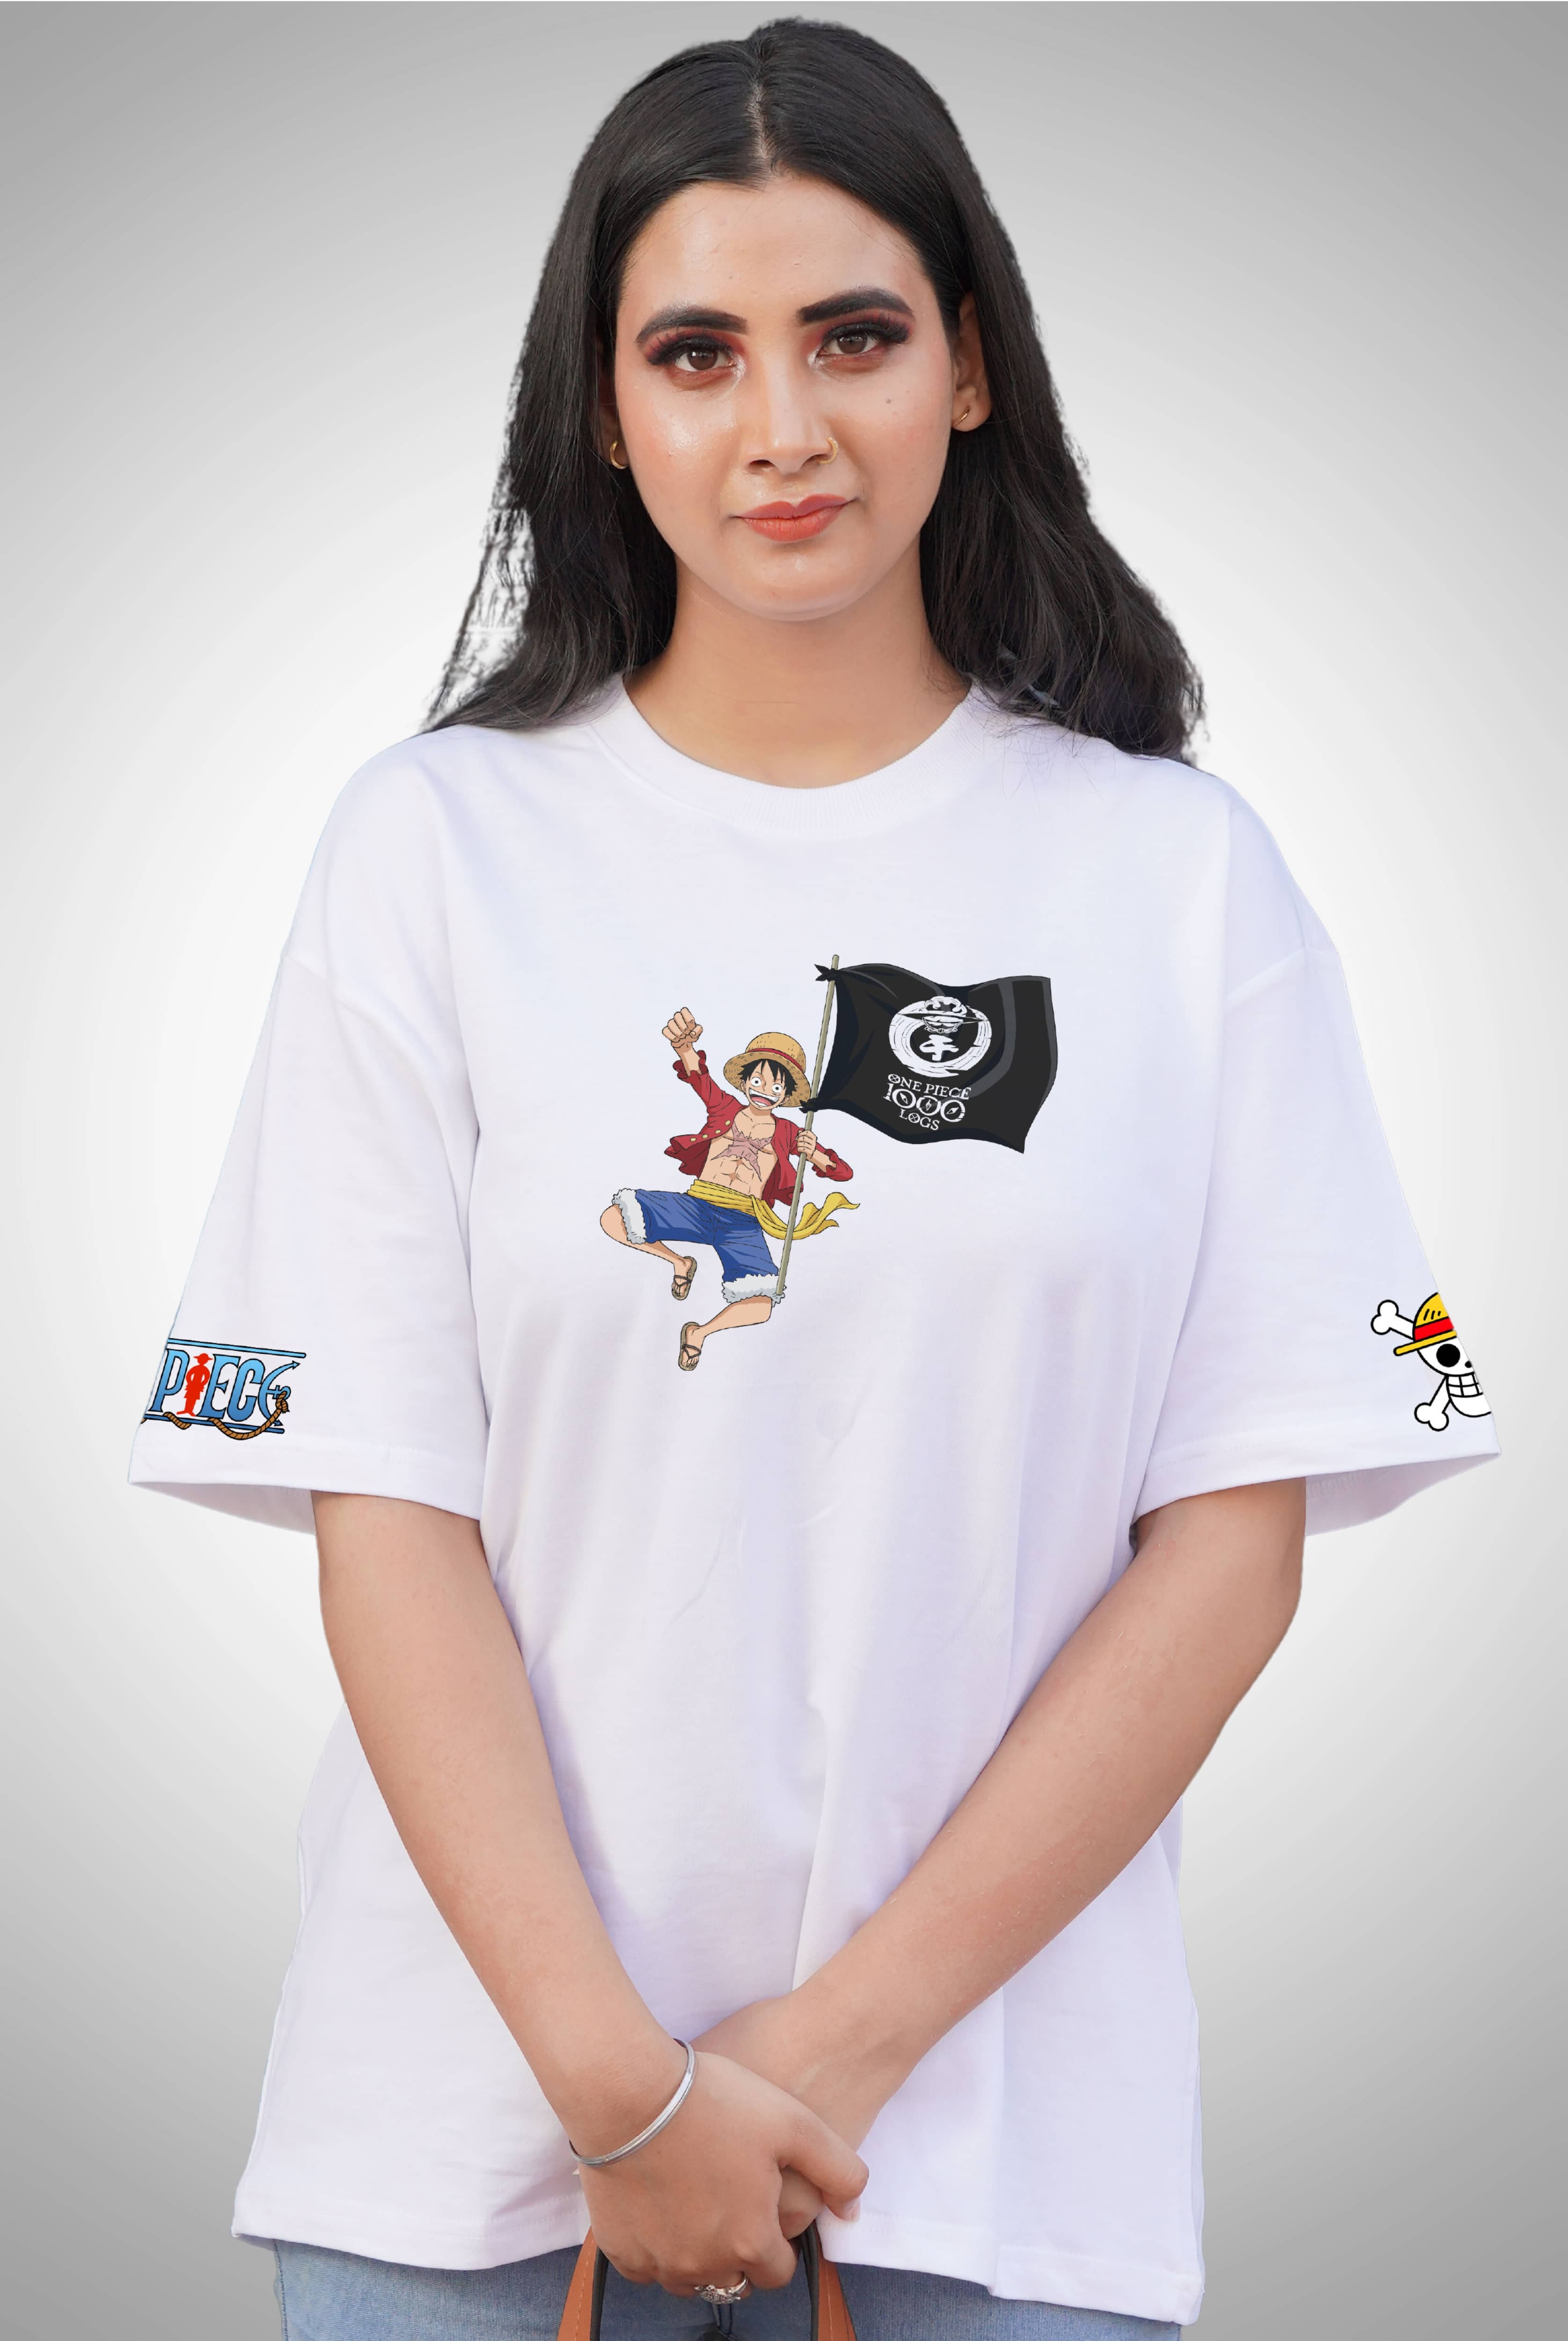 Monkey D Luffy 2 Women's Oversized Anime T-Shirt